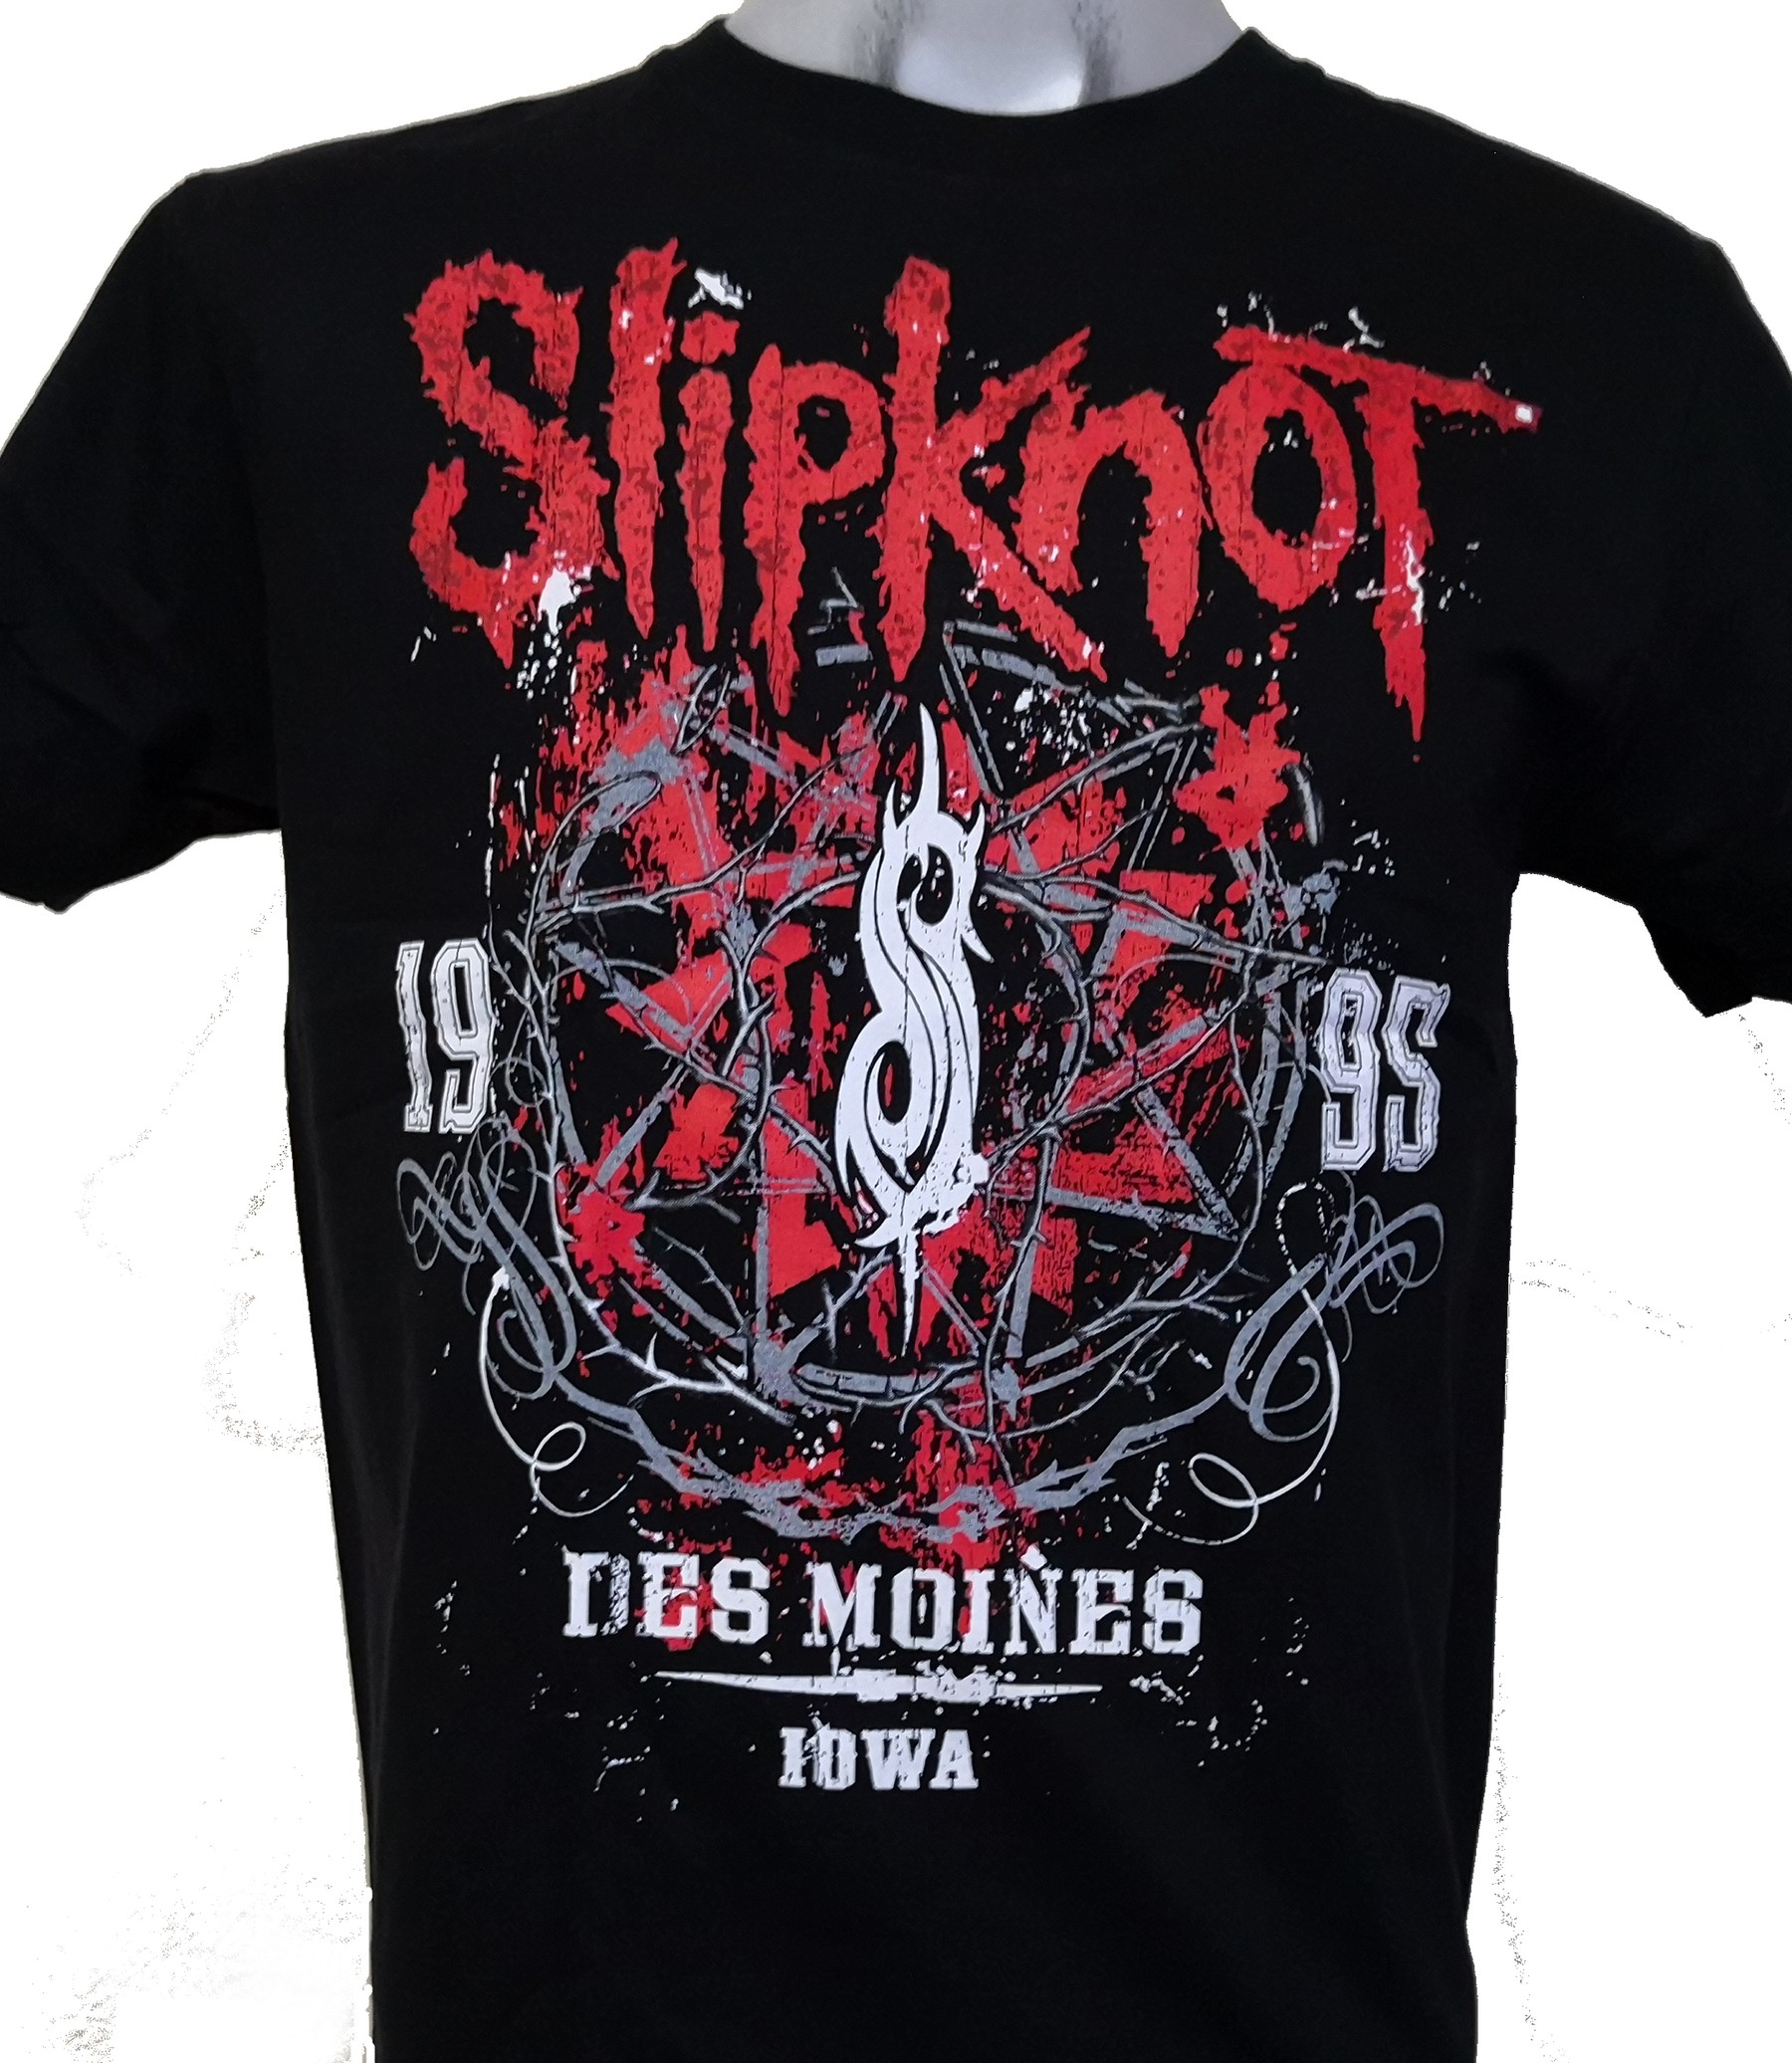 Slipknot t-shirt size M â RoxxBKK